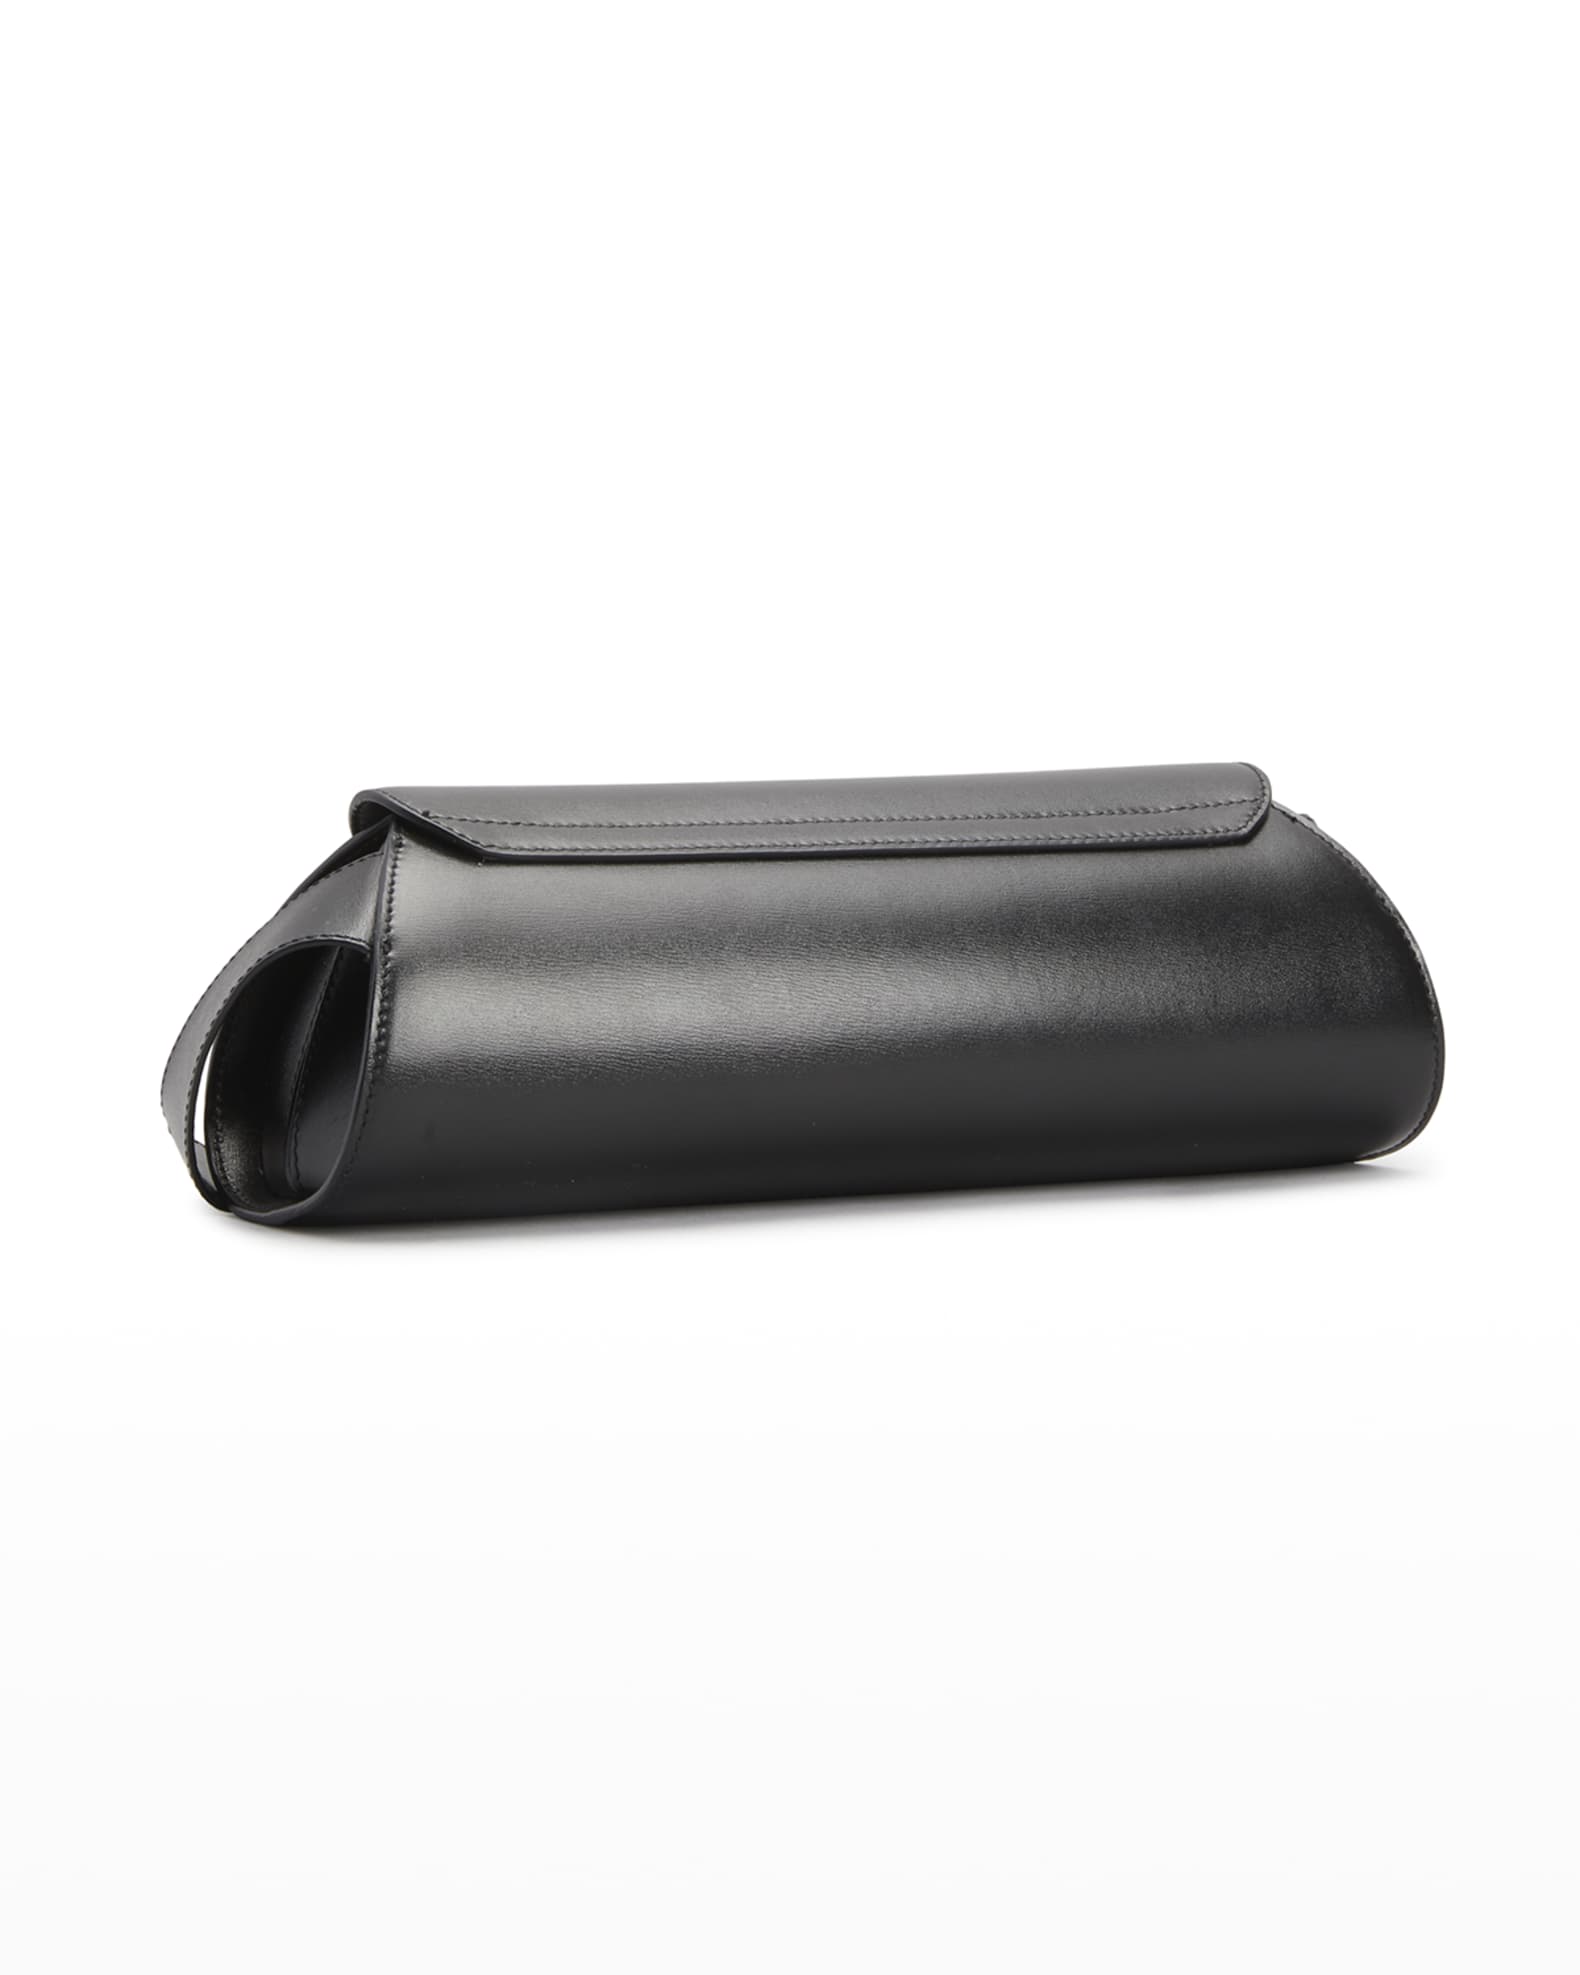 Jil Sander Cannolo Small Flap Leather Shoulder Bag | Neiman Marcus